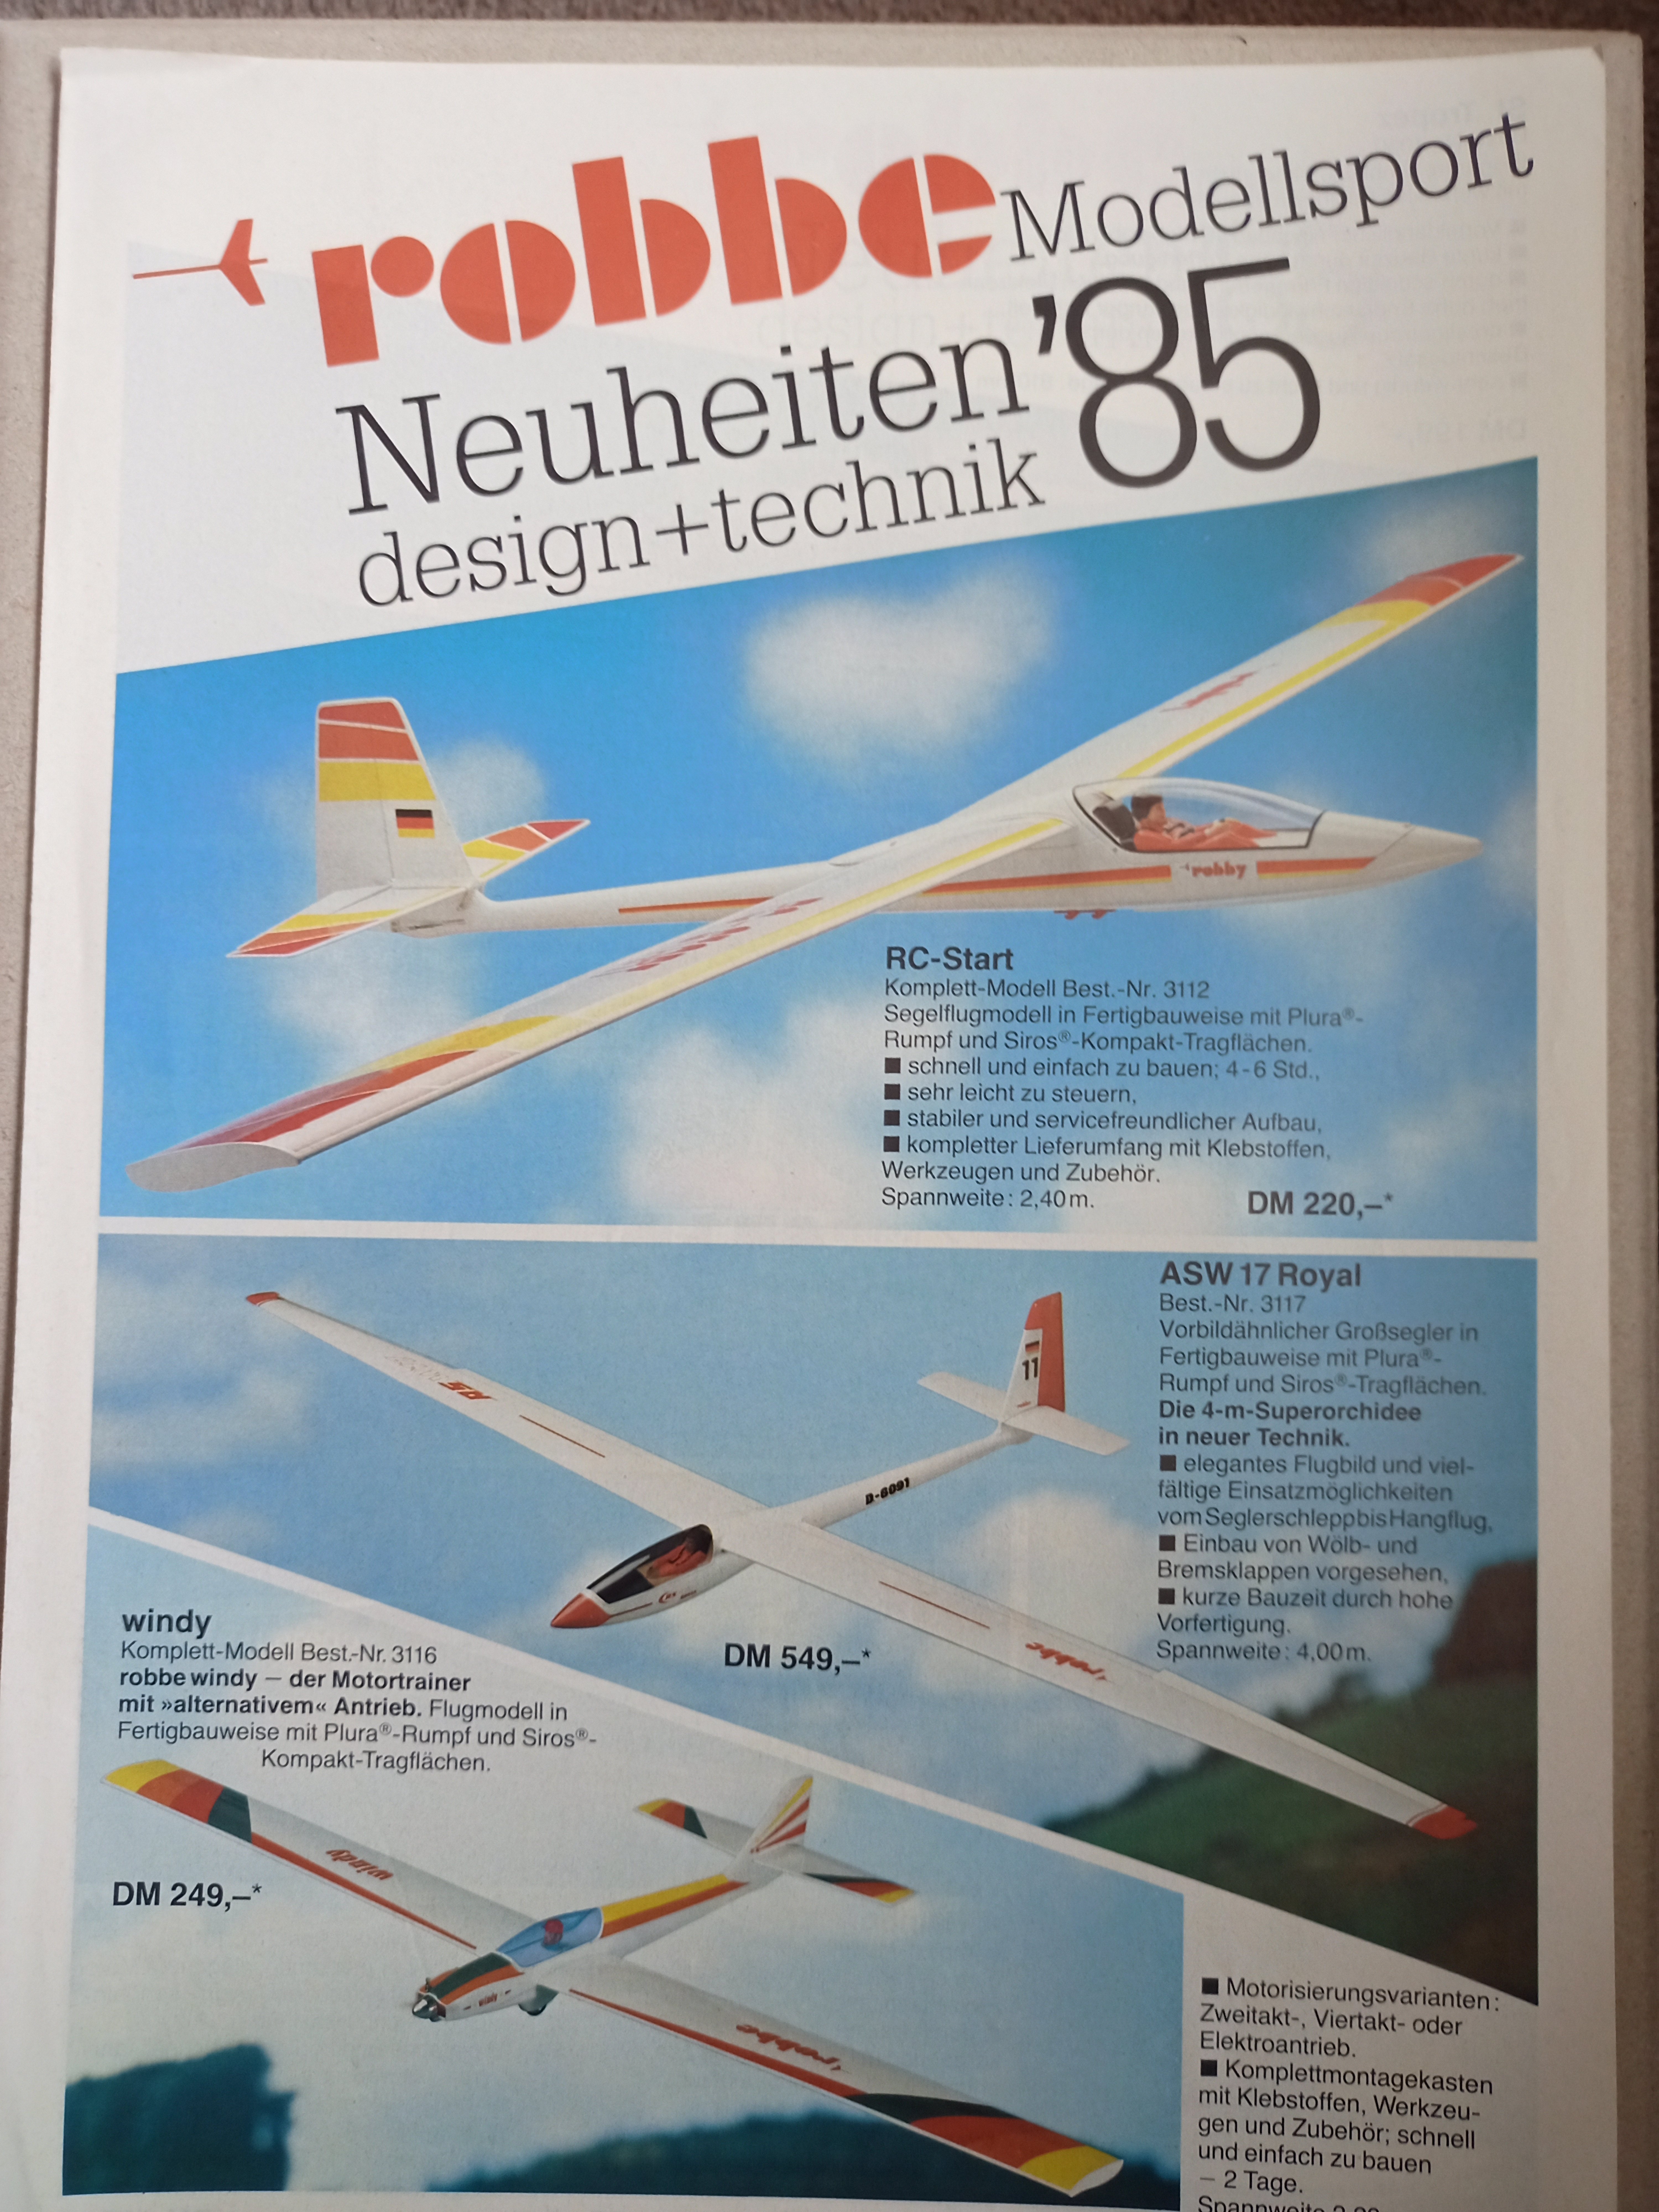 robbe Neuheiten 1985 (Deutsches Segelflugmuseum mit Modellflug CC BY-NC-SA)